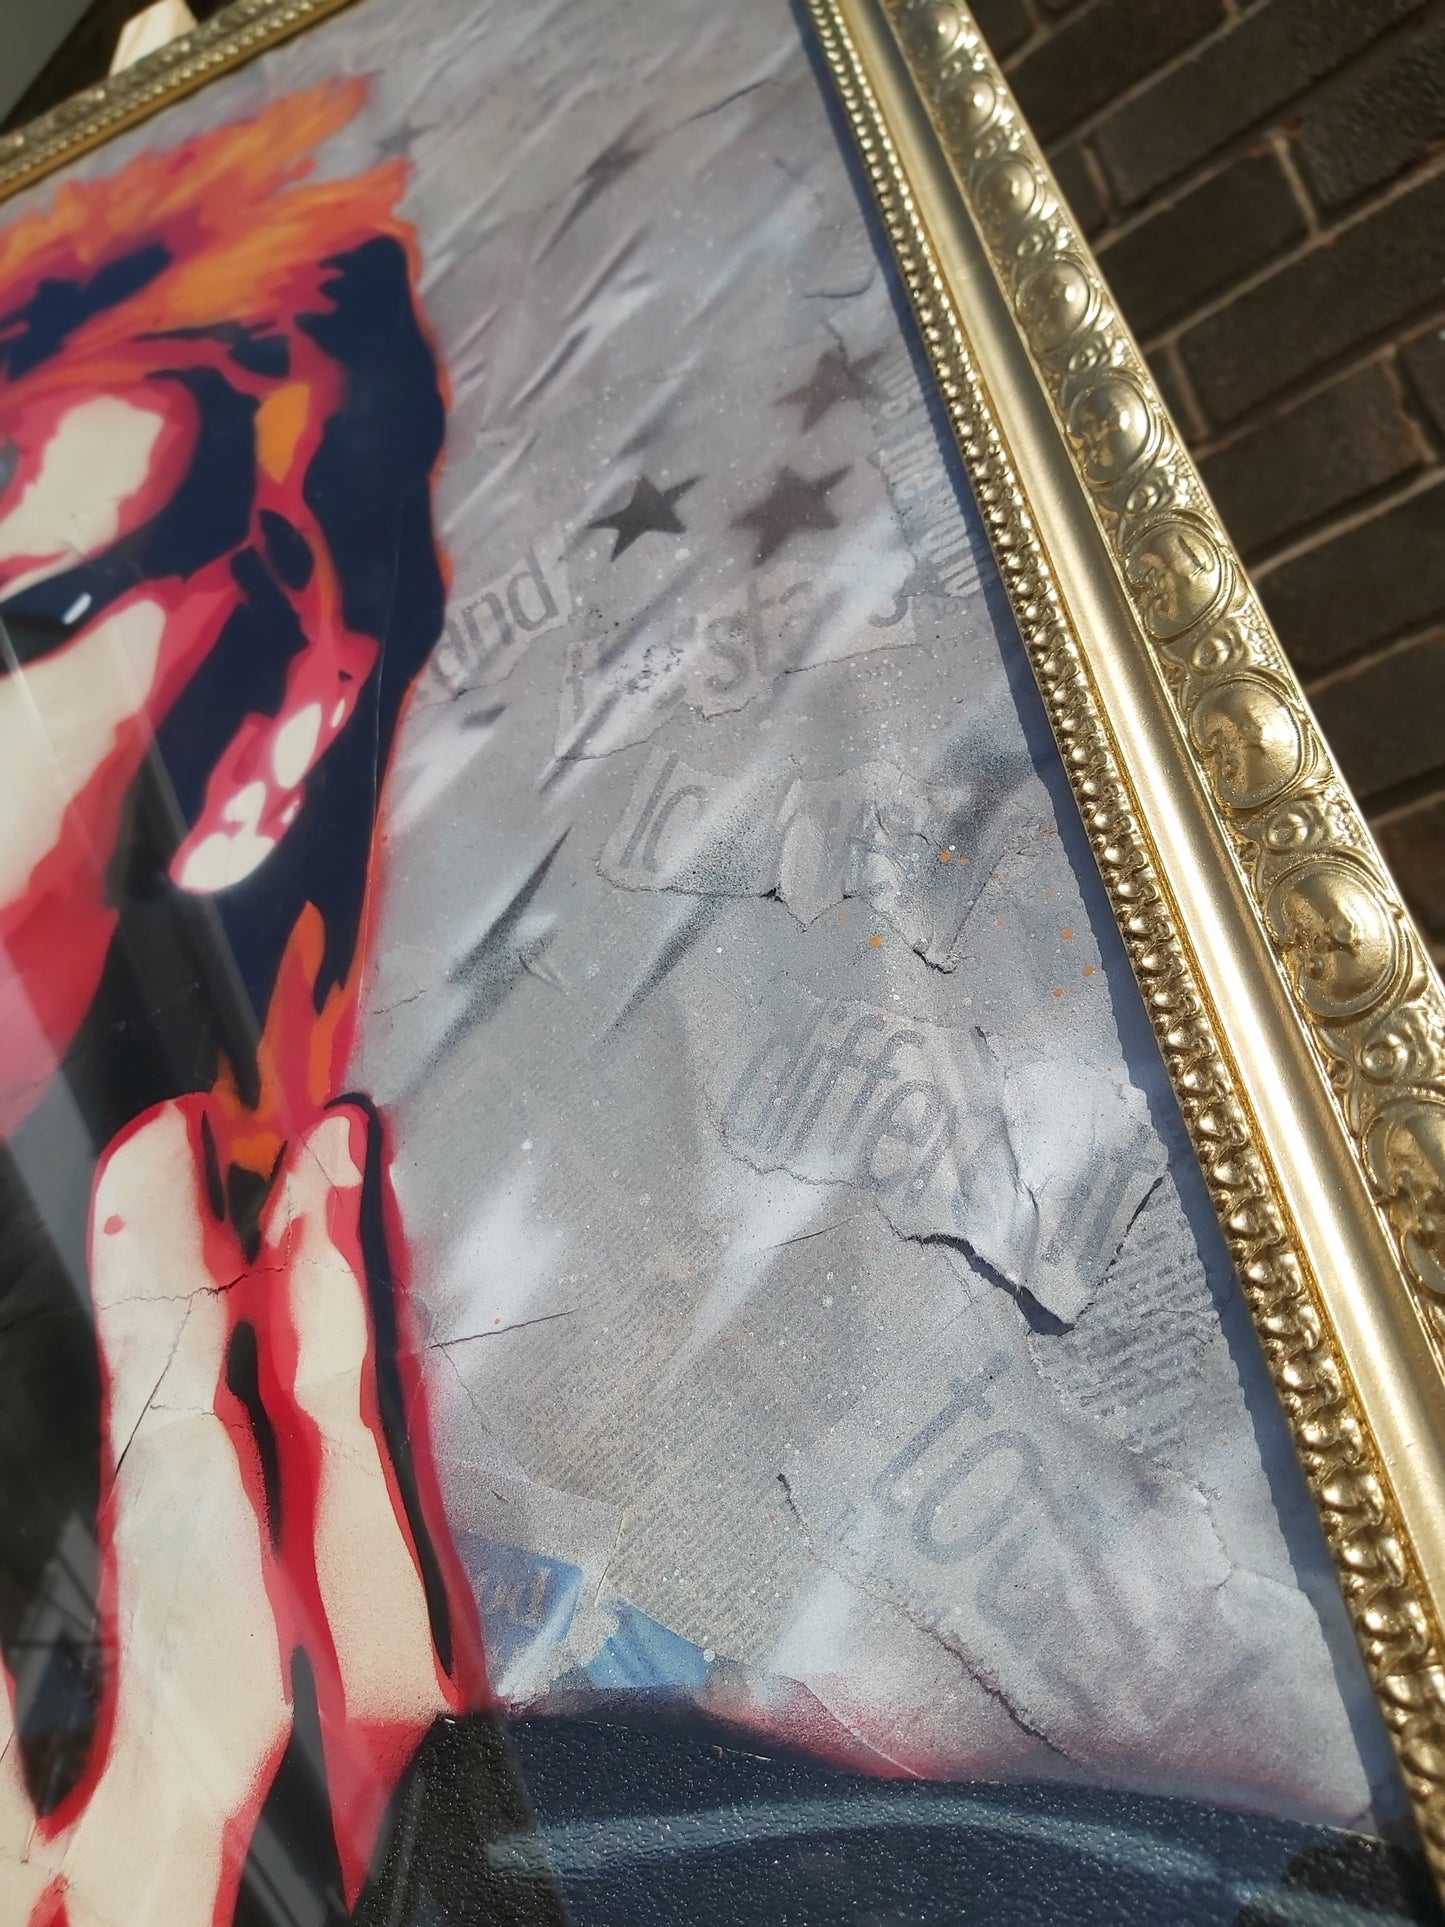 David Bowie "Ziggy Stardust" Original Mixed Media Painting (29" x 36" Frame Size)